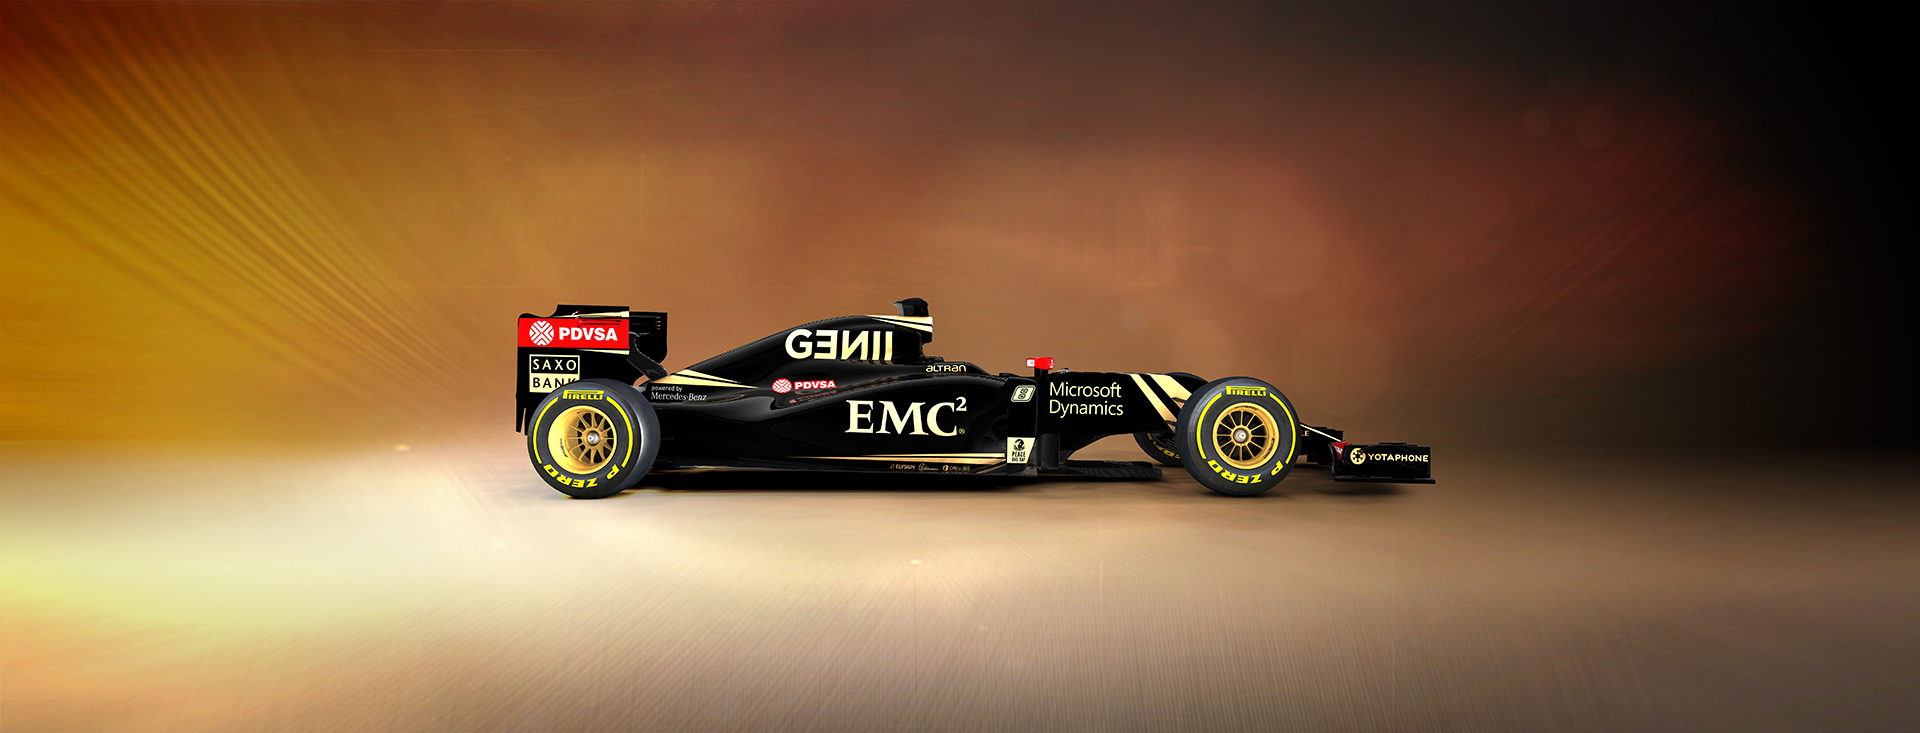 Lotus F1 Team E23 Hybrid